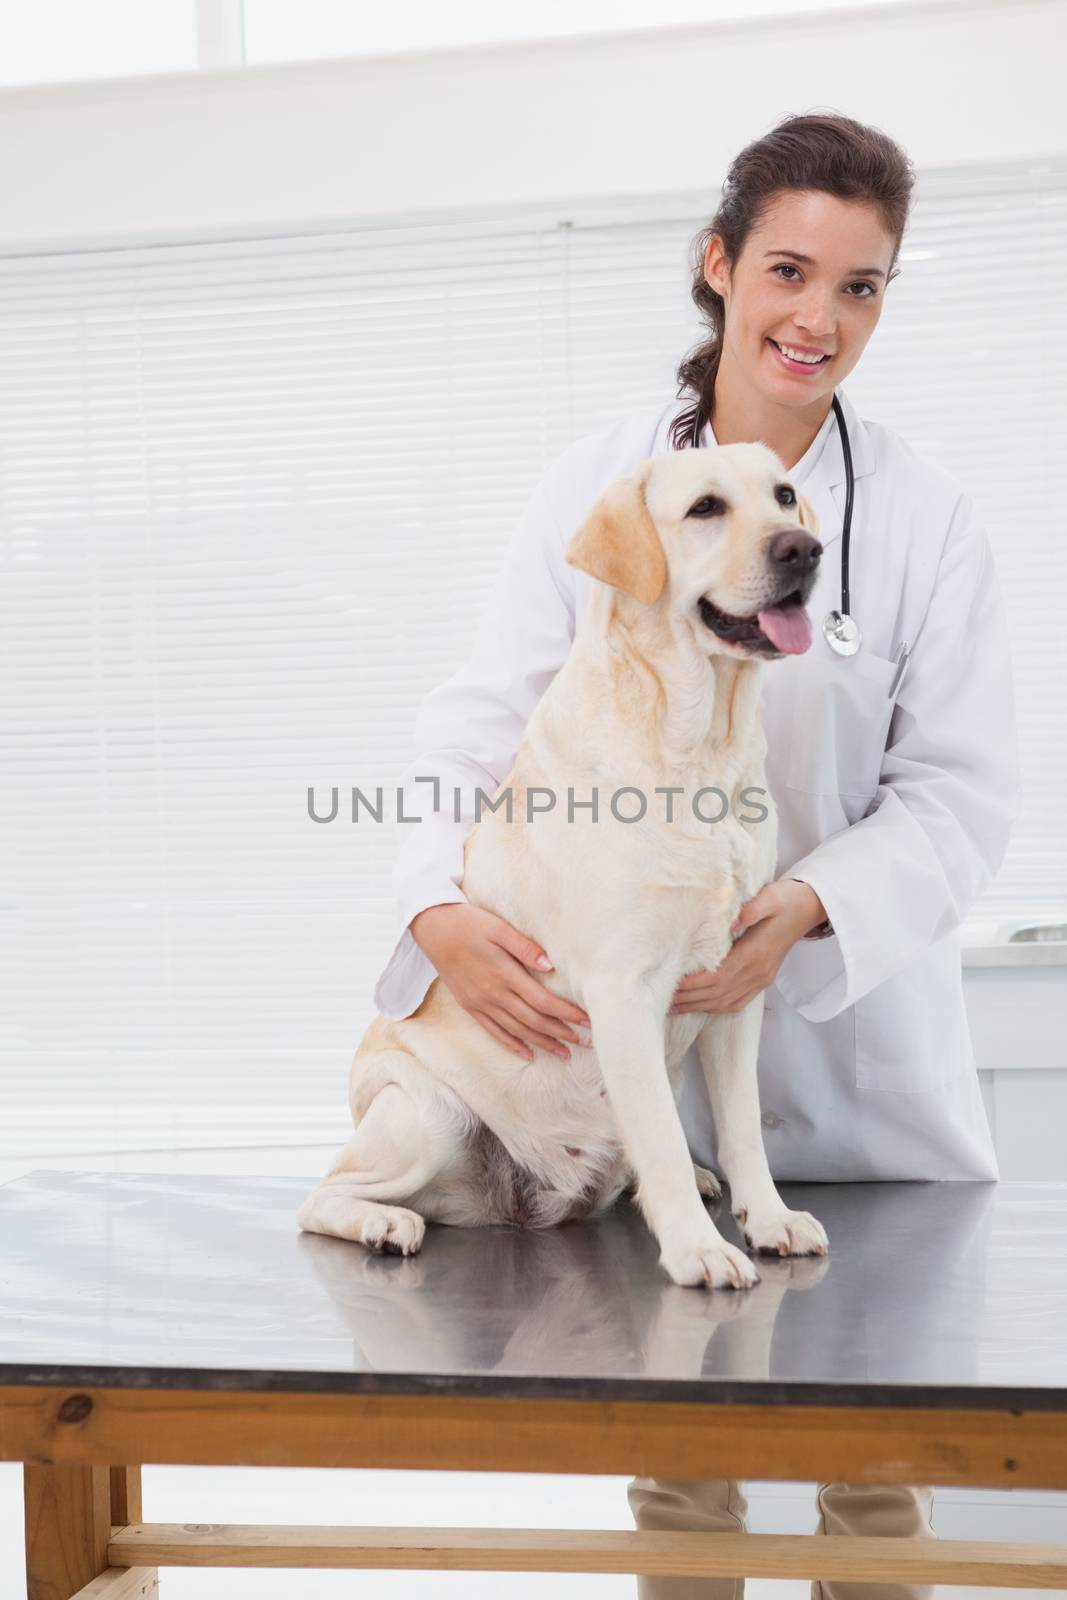 Happy veterinarian examining a cute dog in medical office